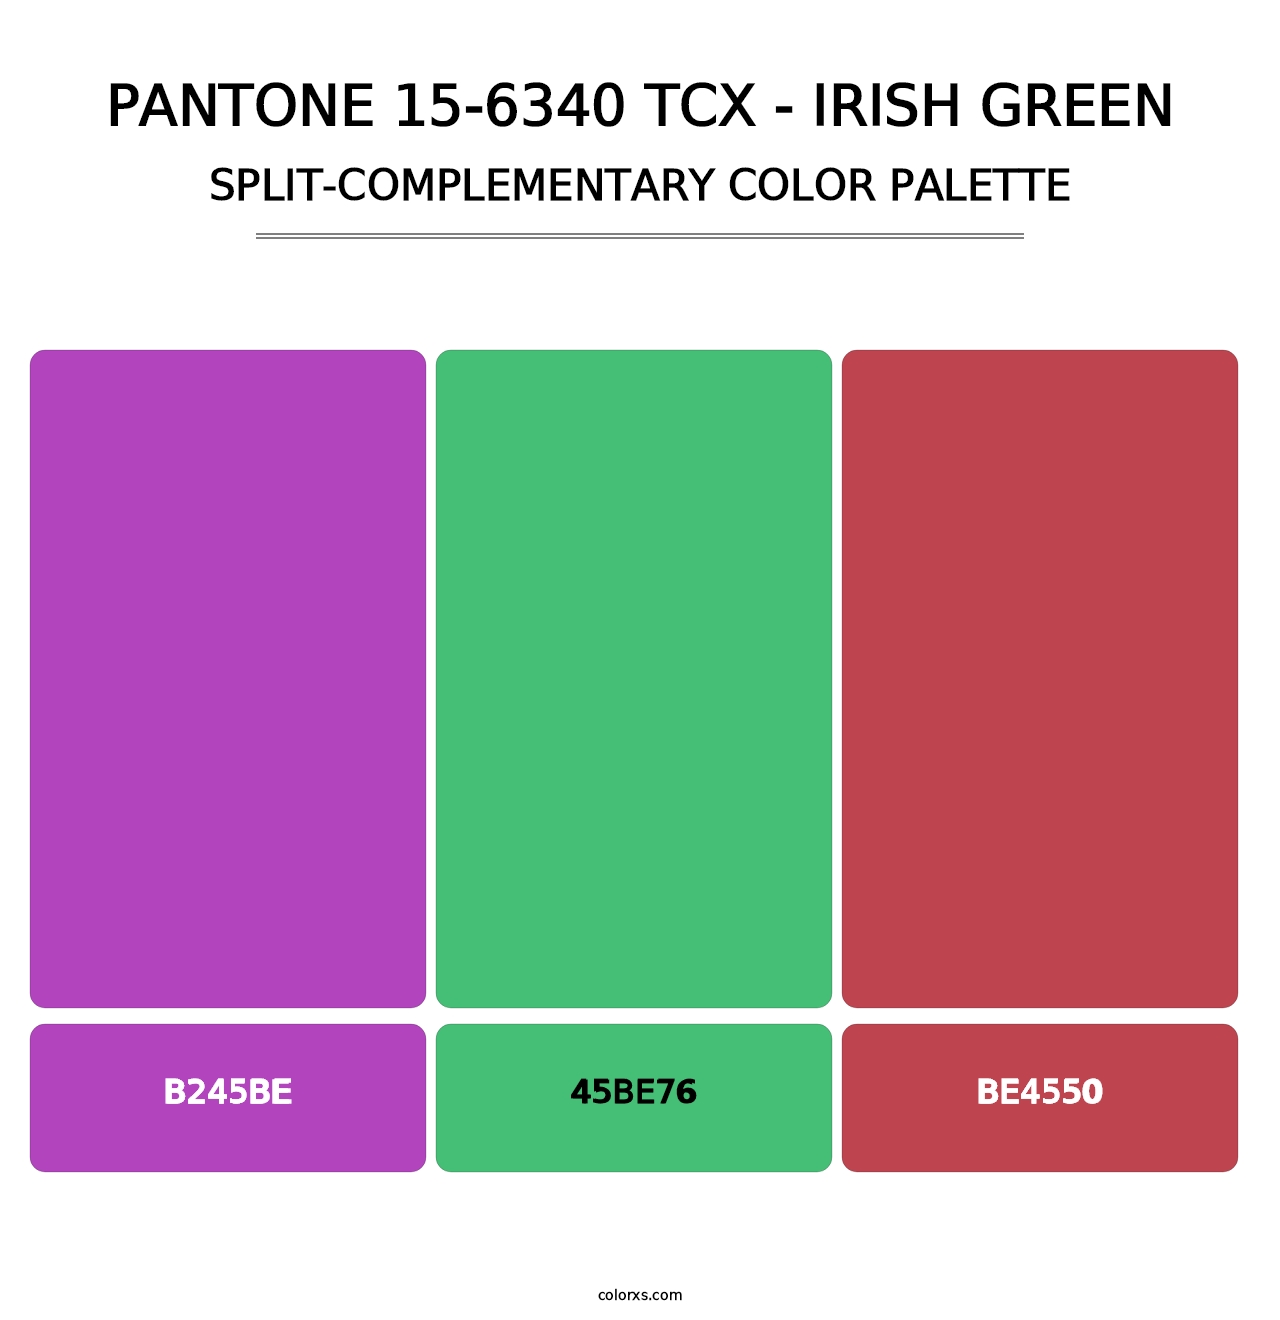 PANTONE 15-6340 TCX - Irish Green - Split-Complementary Color Palette